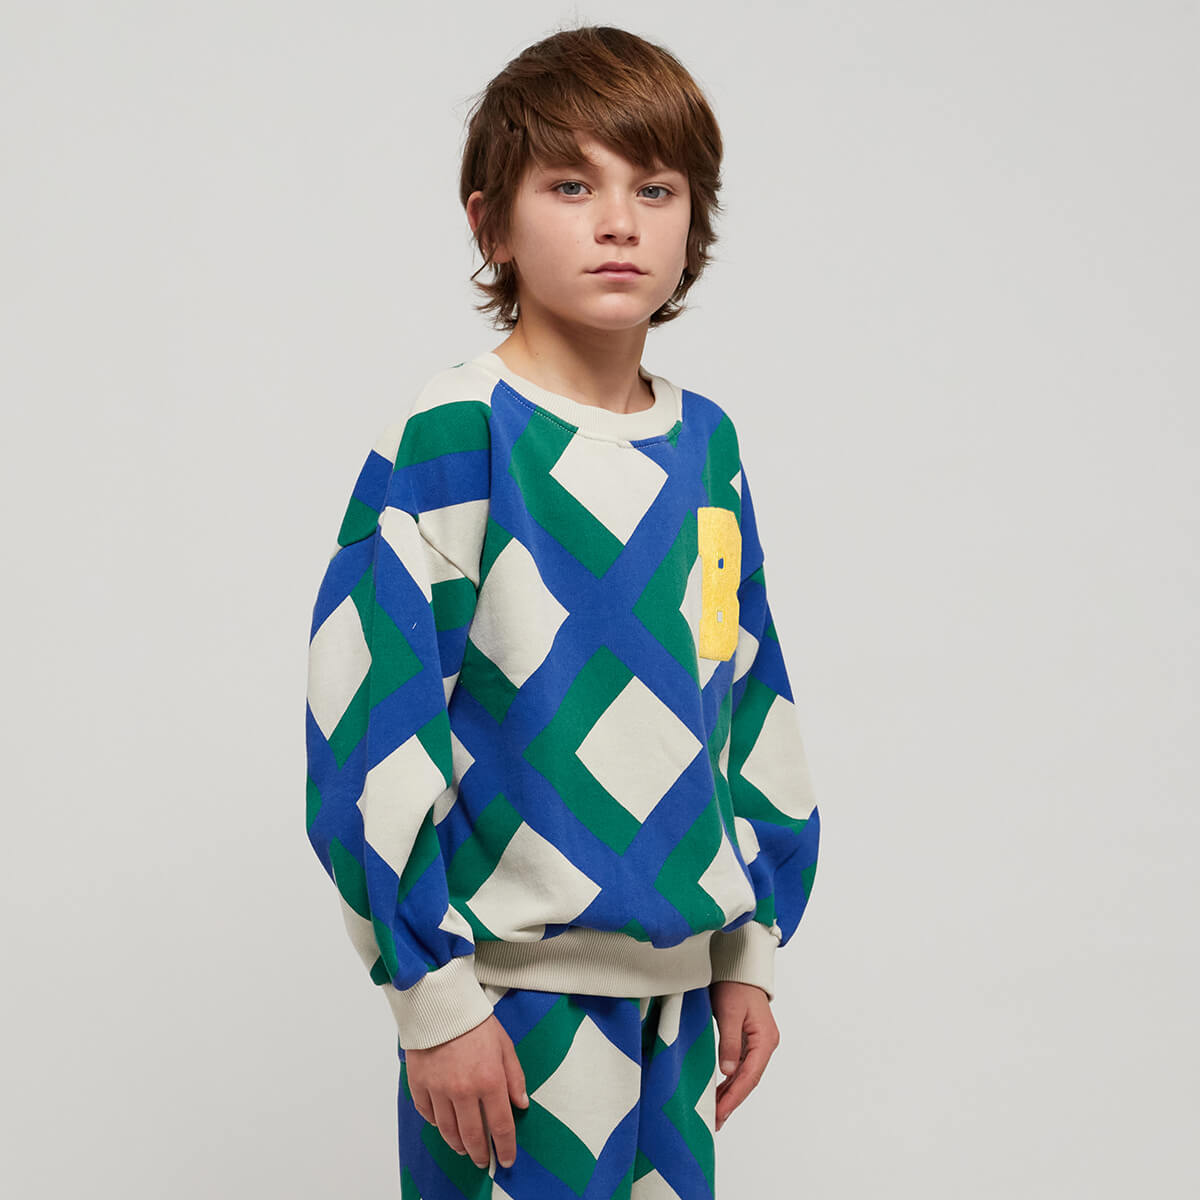 Giant Check Sweatshirt by Bobo Choses – Junior Edition